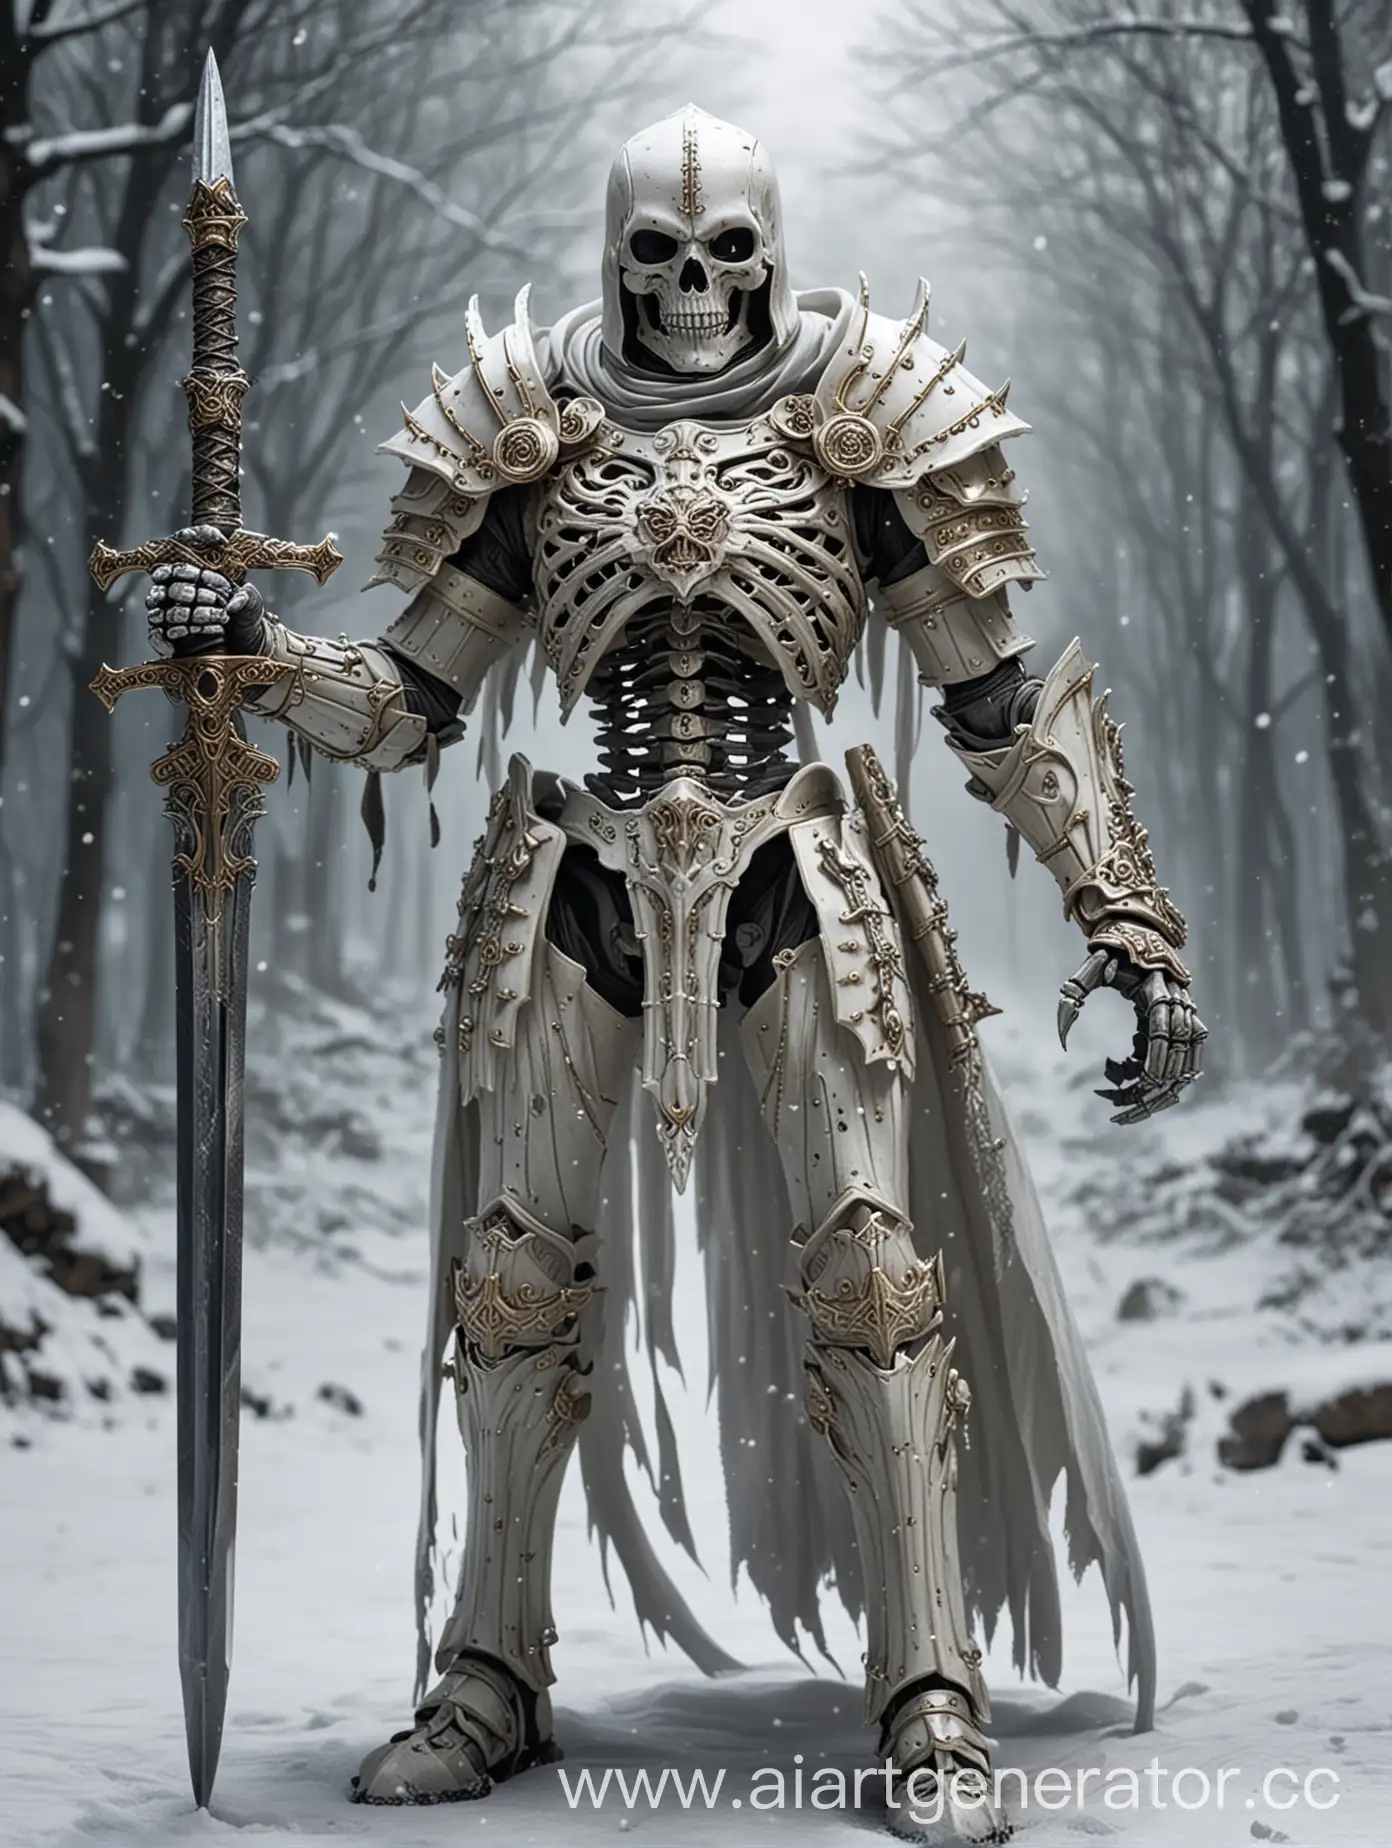 Grim-Skeleton-Paladin-in-SnowWhite-Armor-with-Sword-and-Helmet